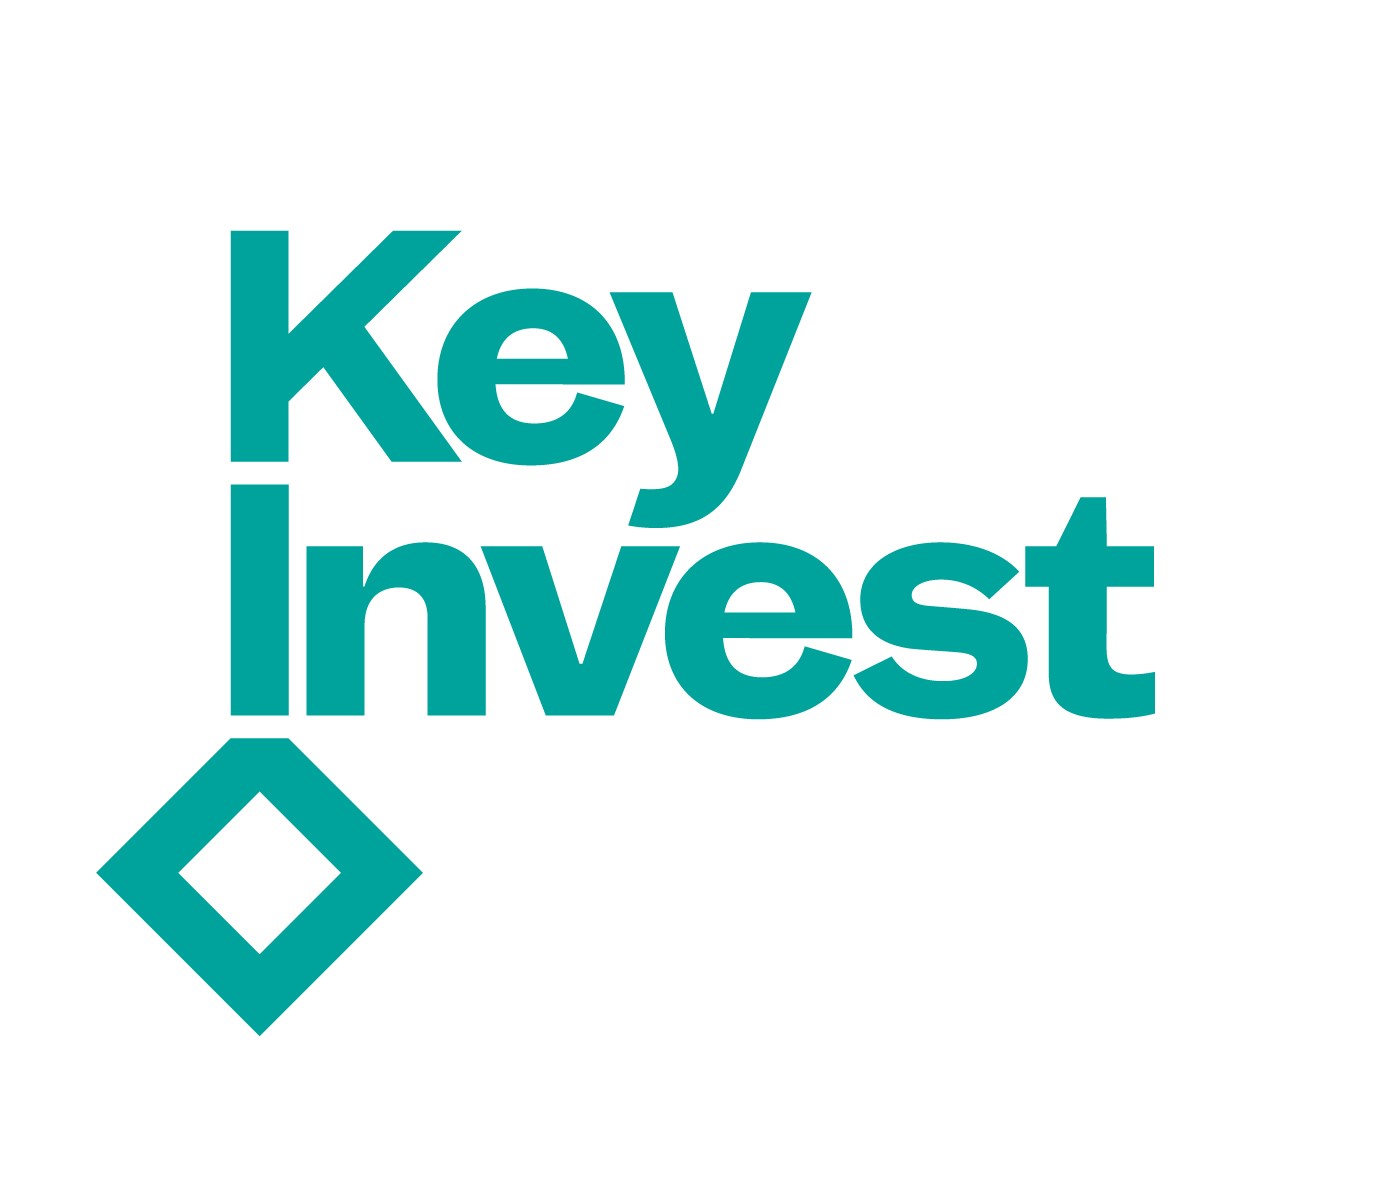 KeyInvest operator for retirement villages